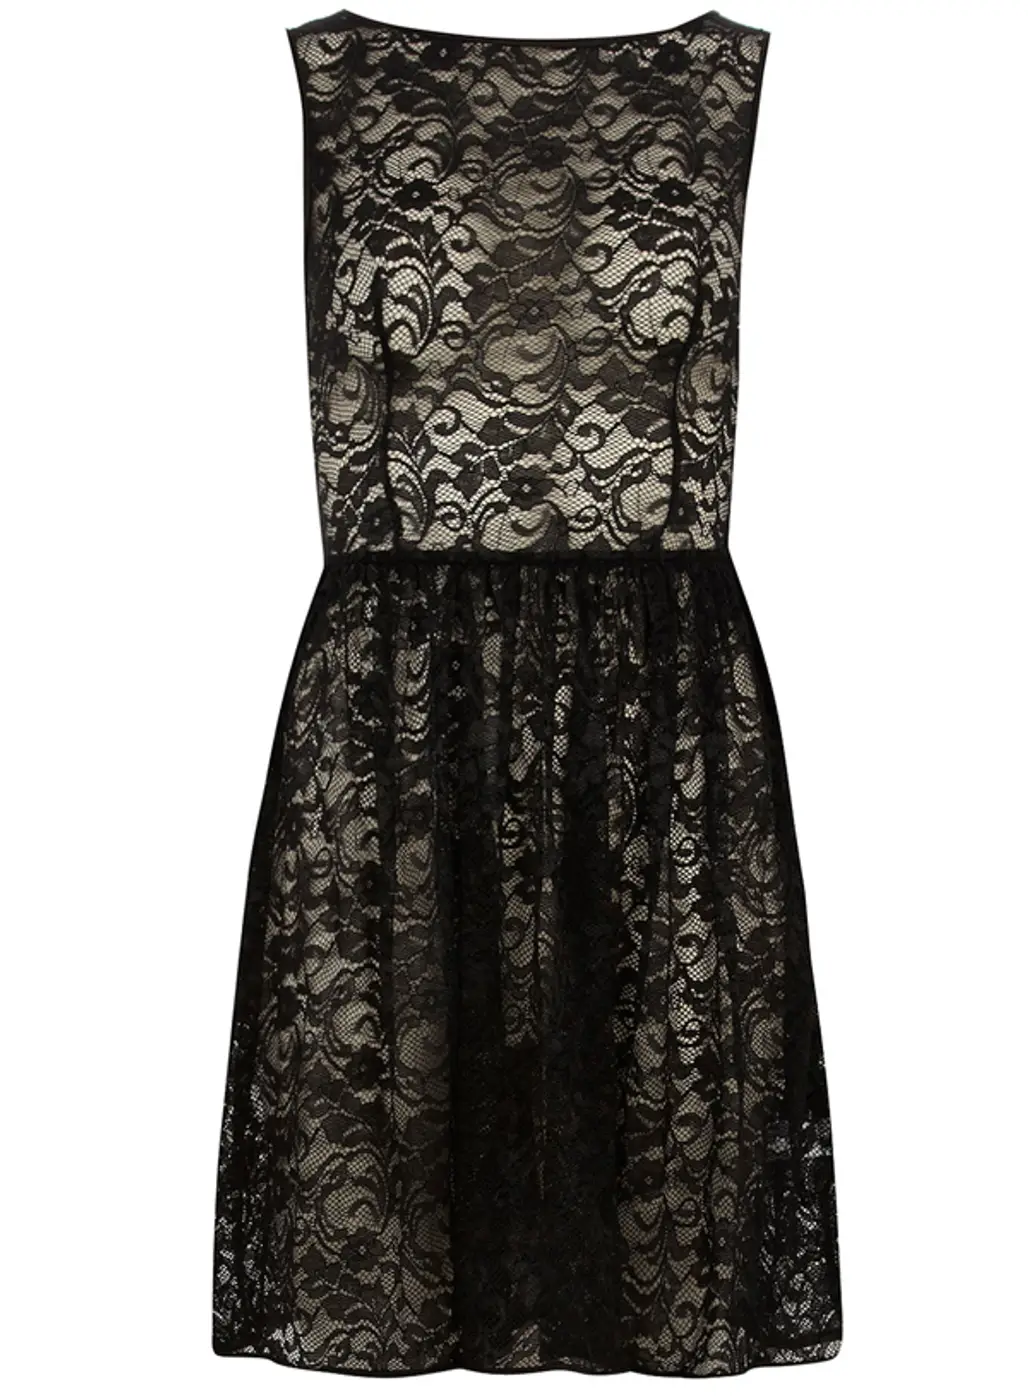 Black Lace Overlay Dress